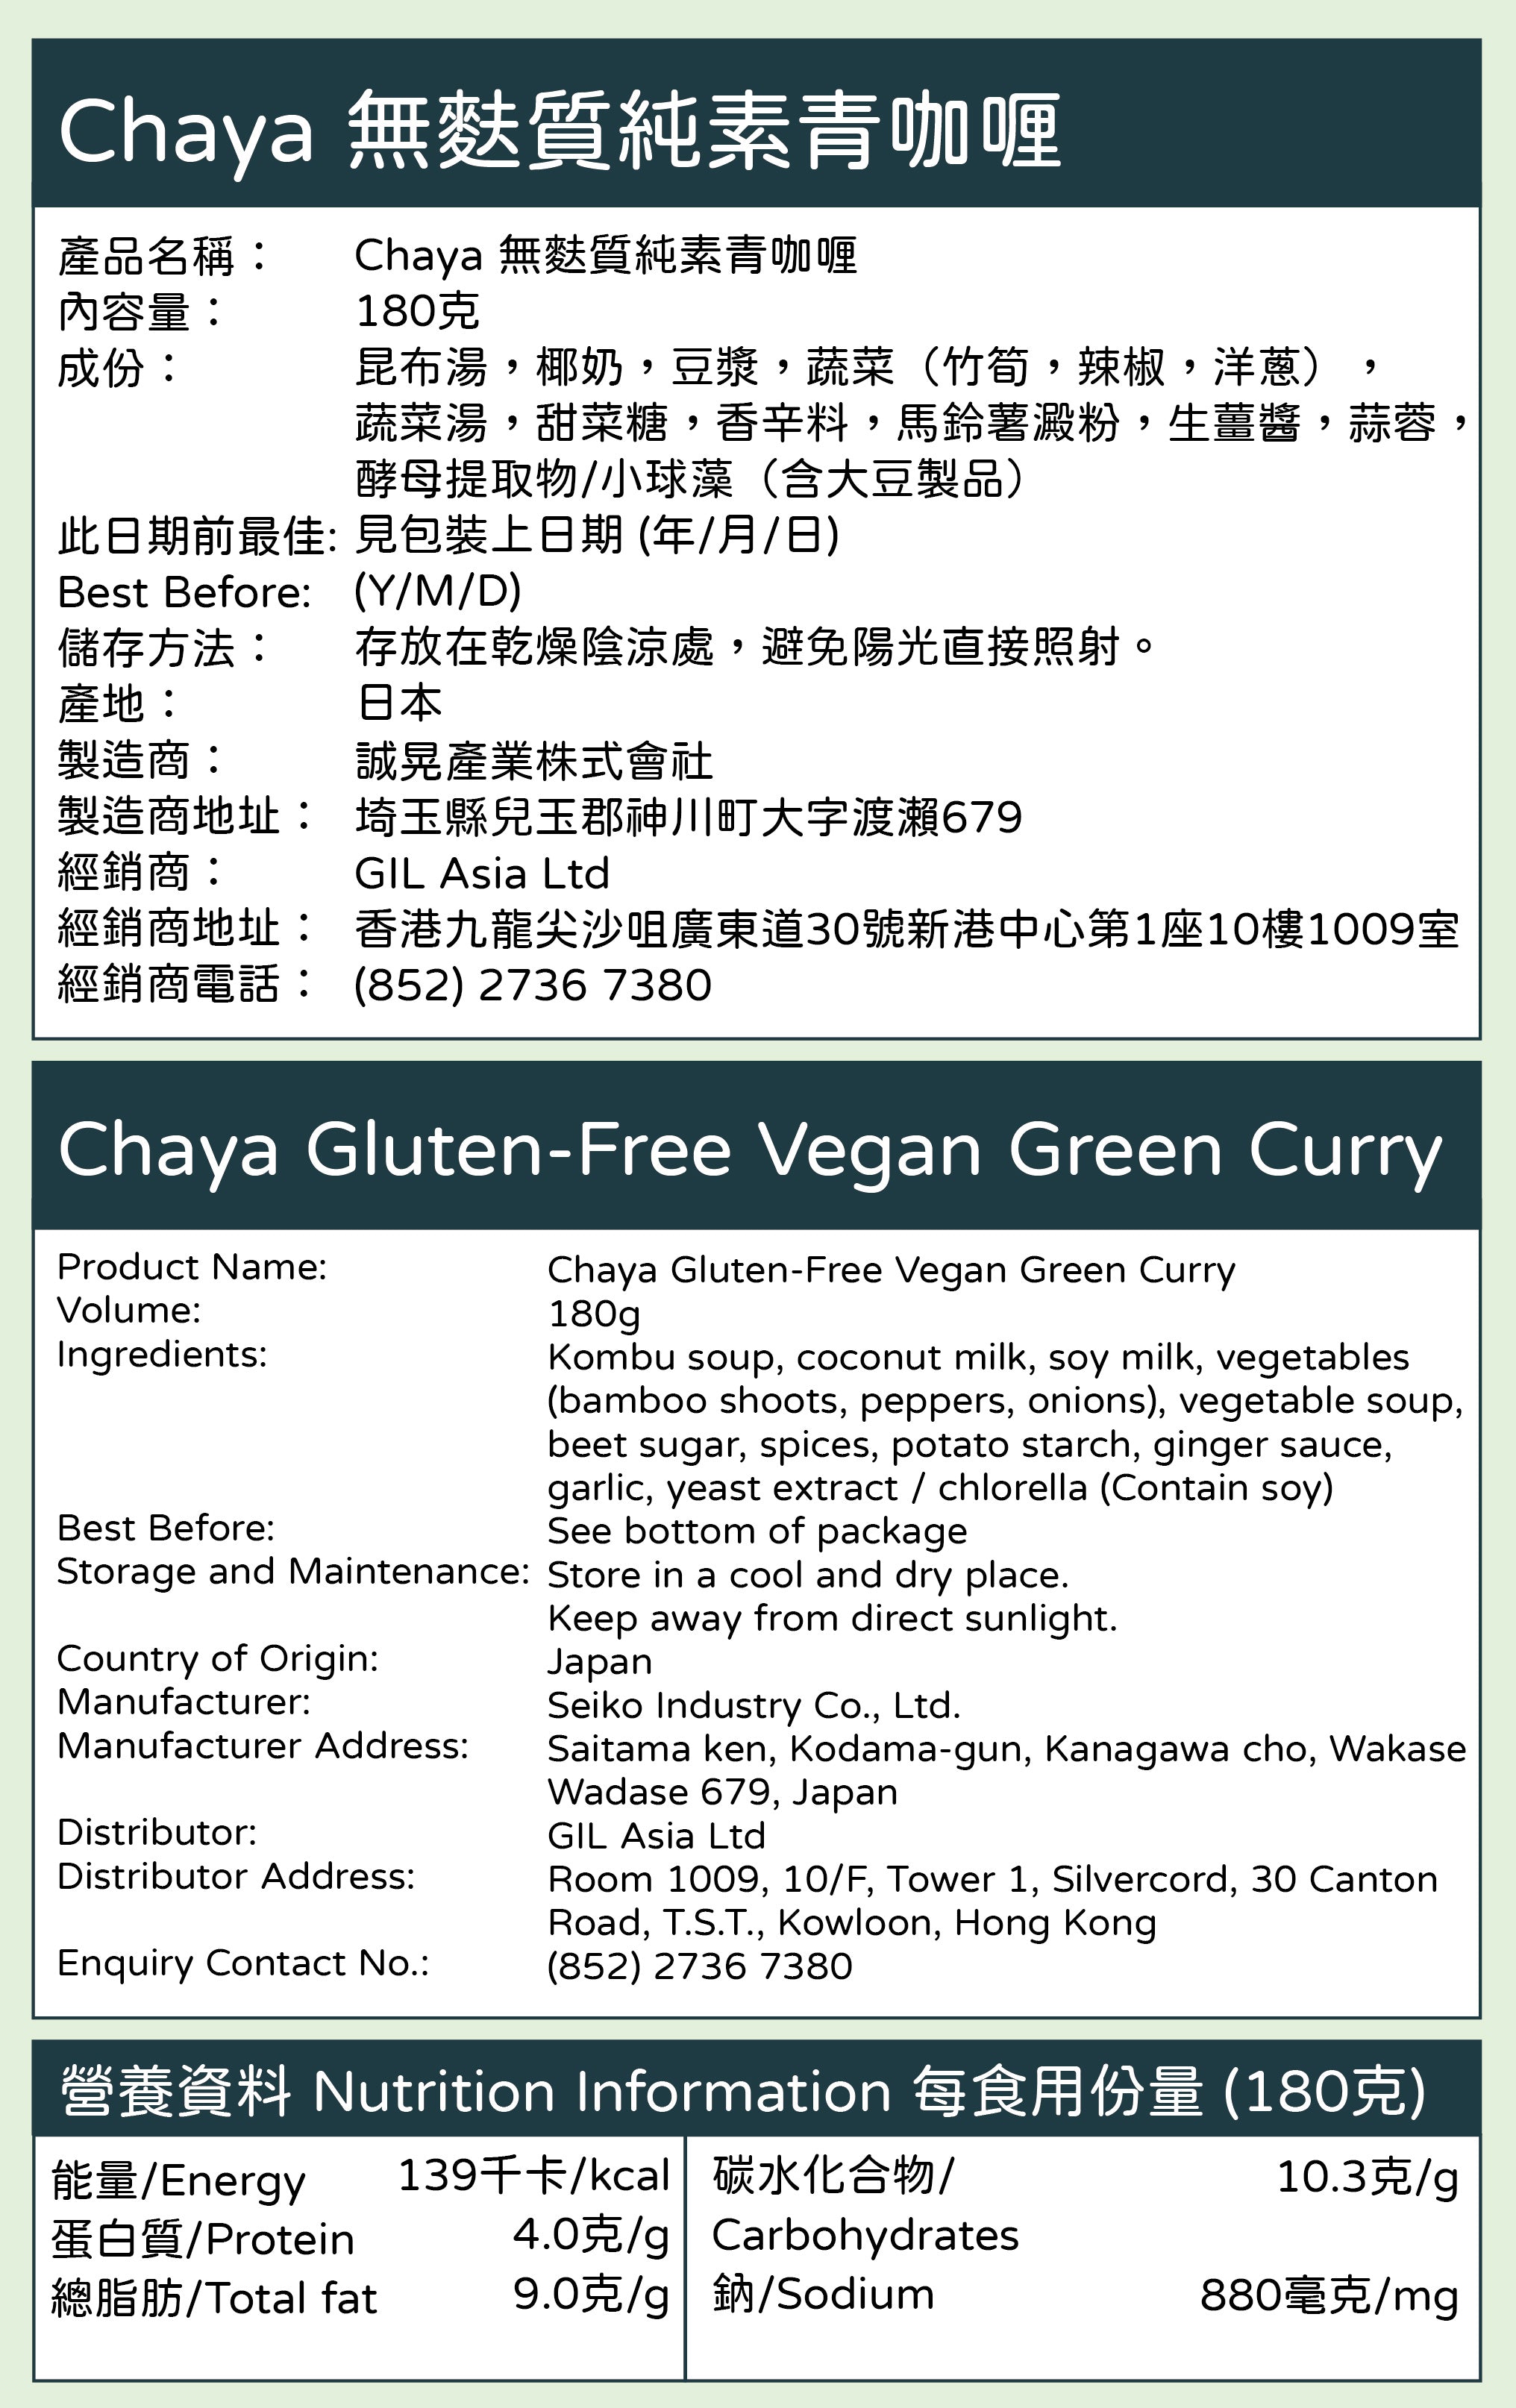 Chaya Gluten-Free Vegan Green Curry [180g]